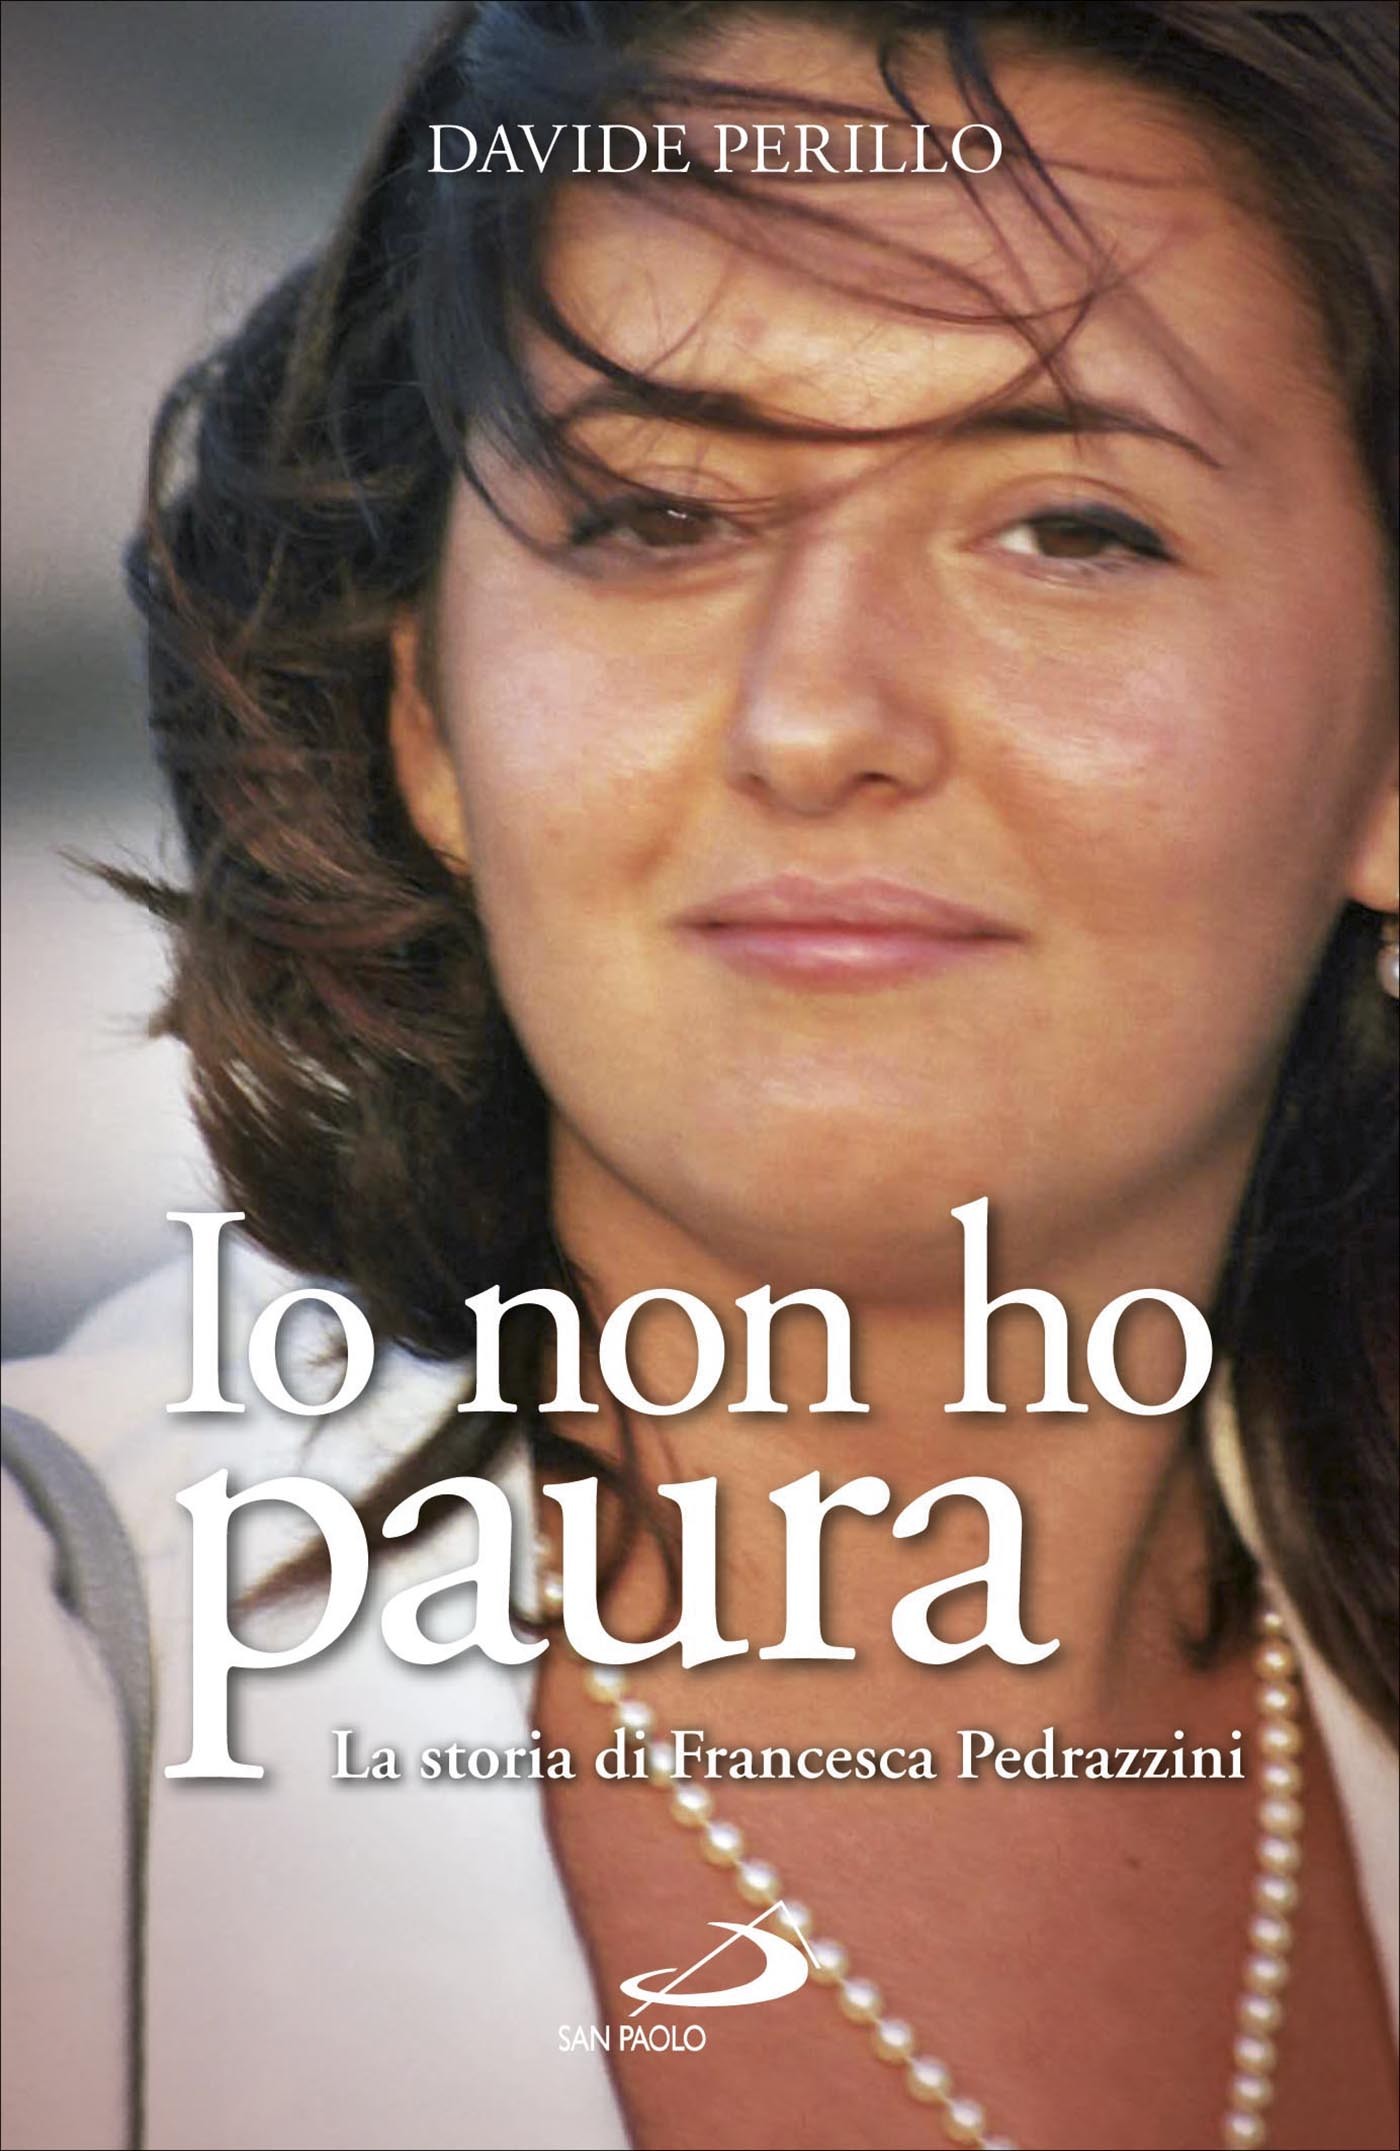 Francesca Pedrazzini